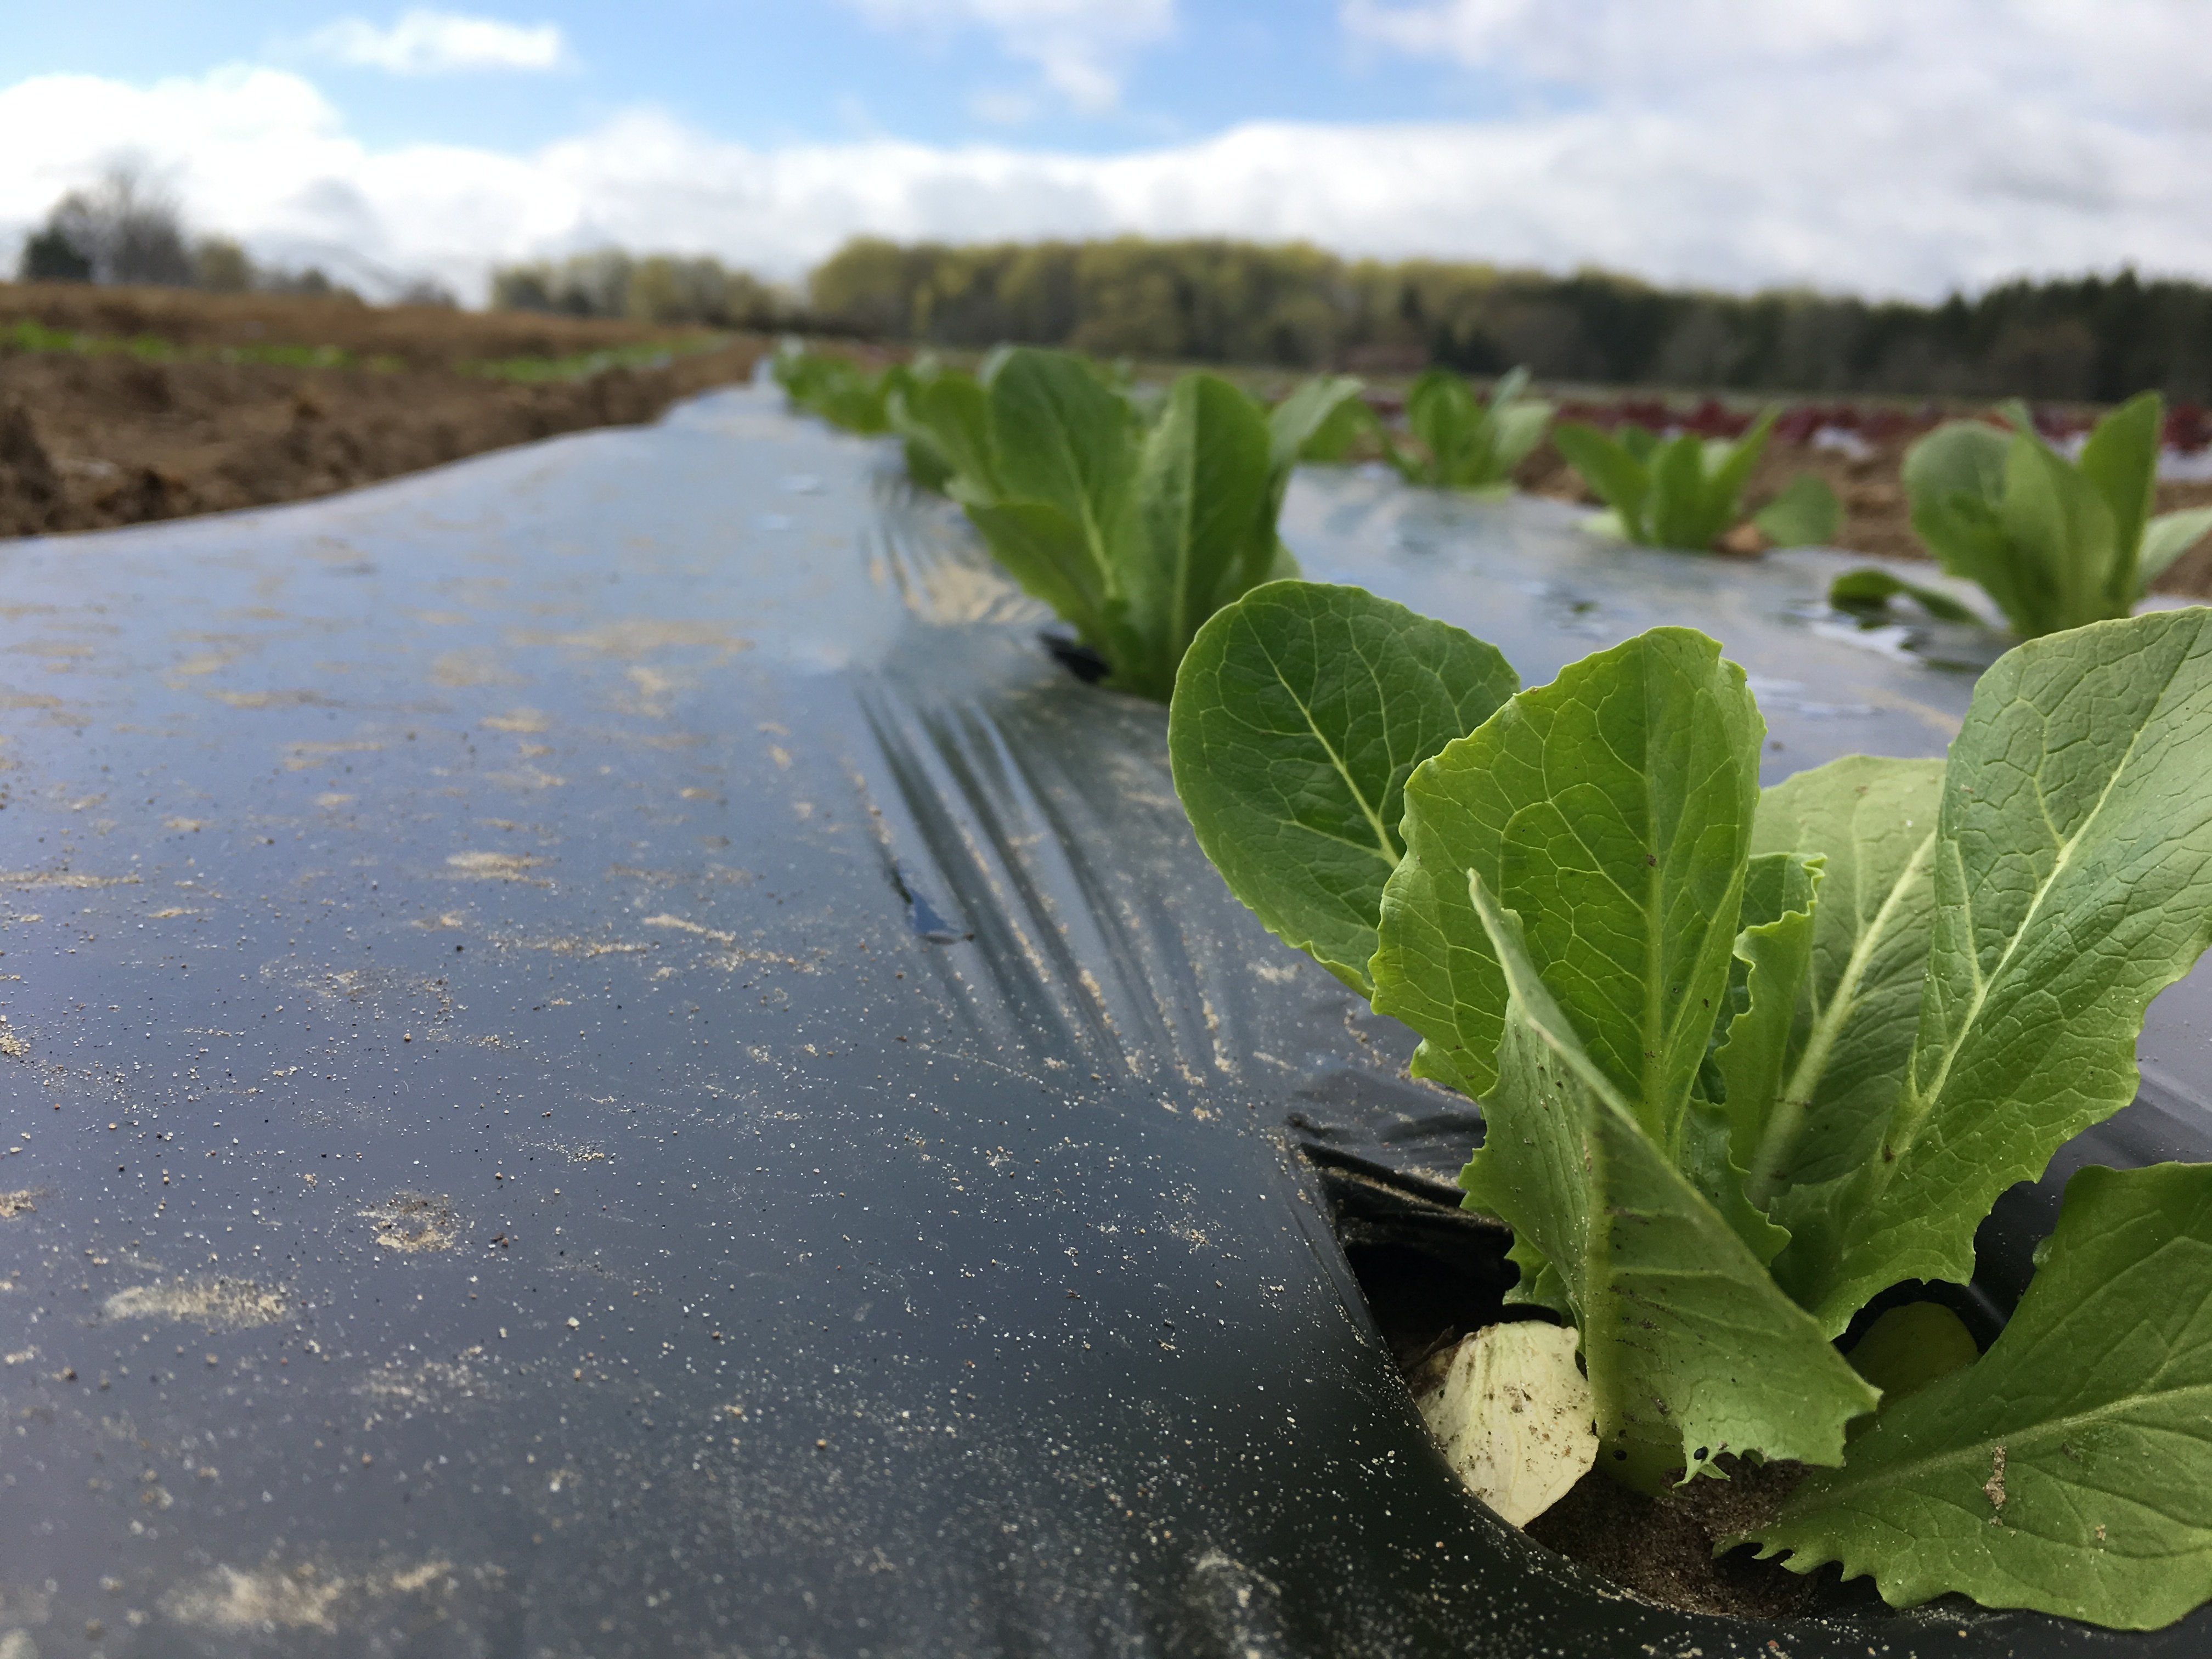 Previous Happening: Week 1 of 20; Summer 2019 Vegetable Share-Coopers CSA Farm Happenings